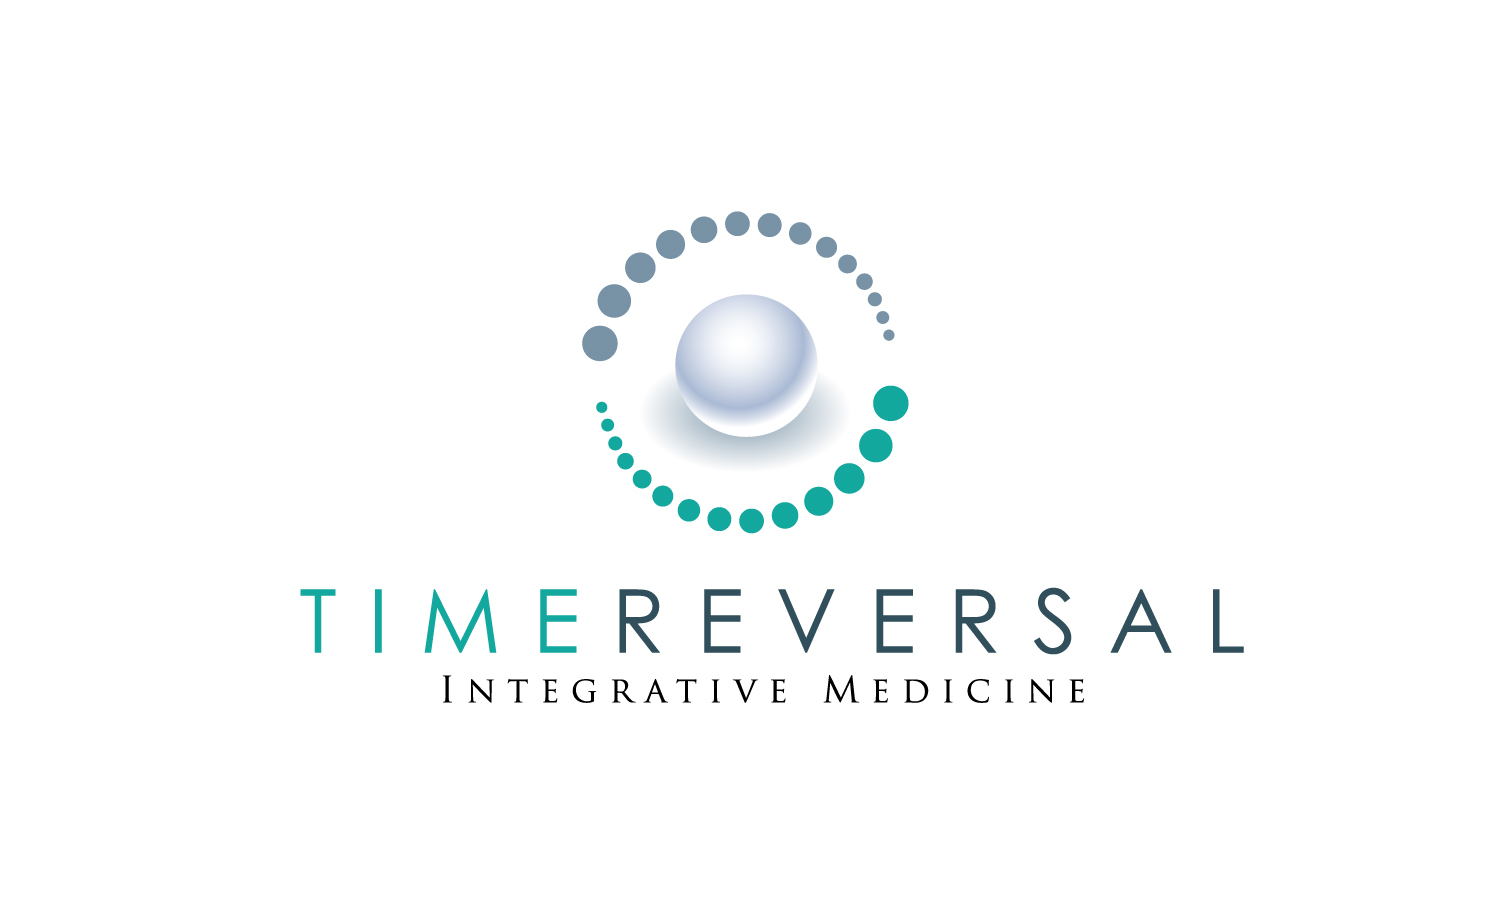 Time Reversal Integrative Medicine